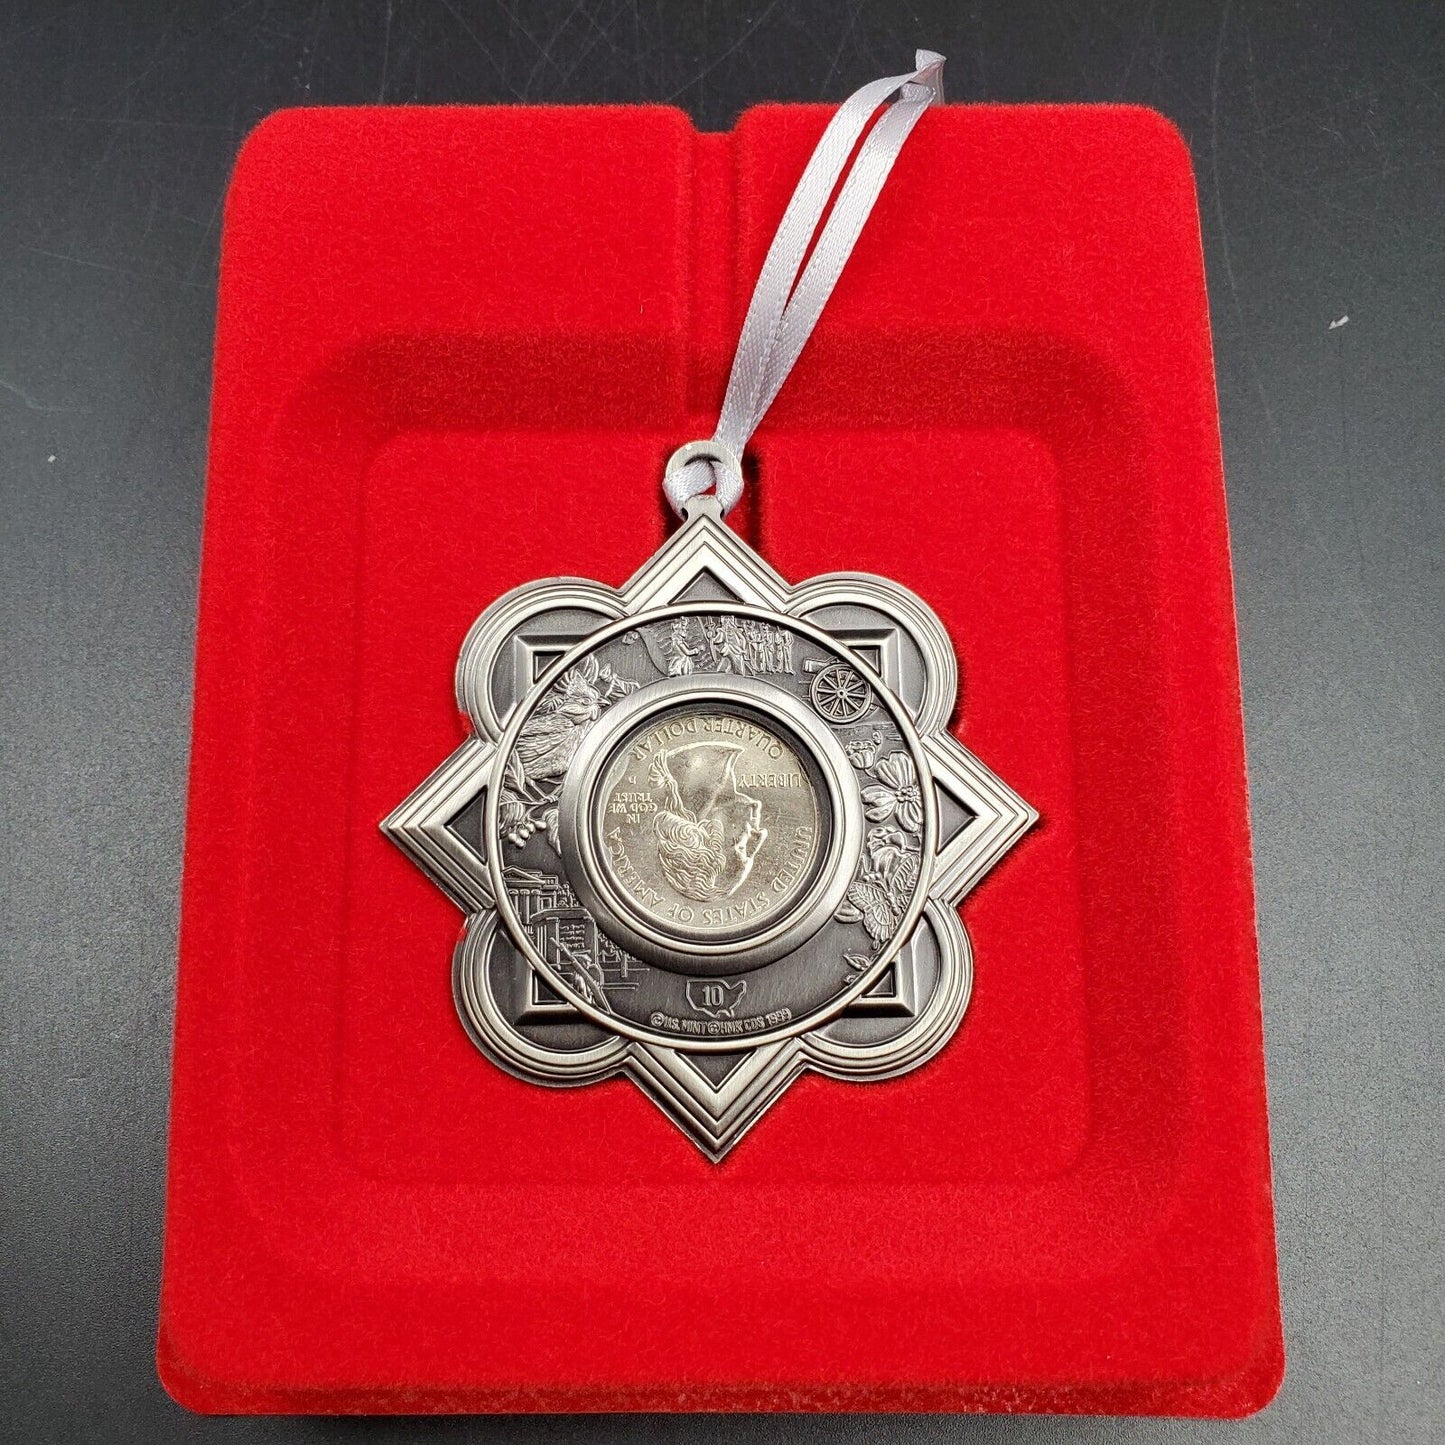 2000 Virginia State Quarter Ornament Hallmark American Spirit Collection In Box